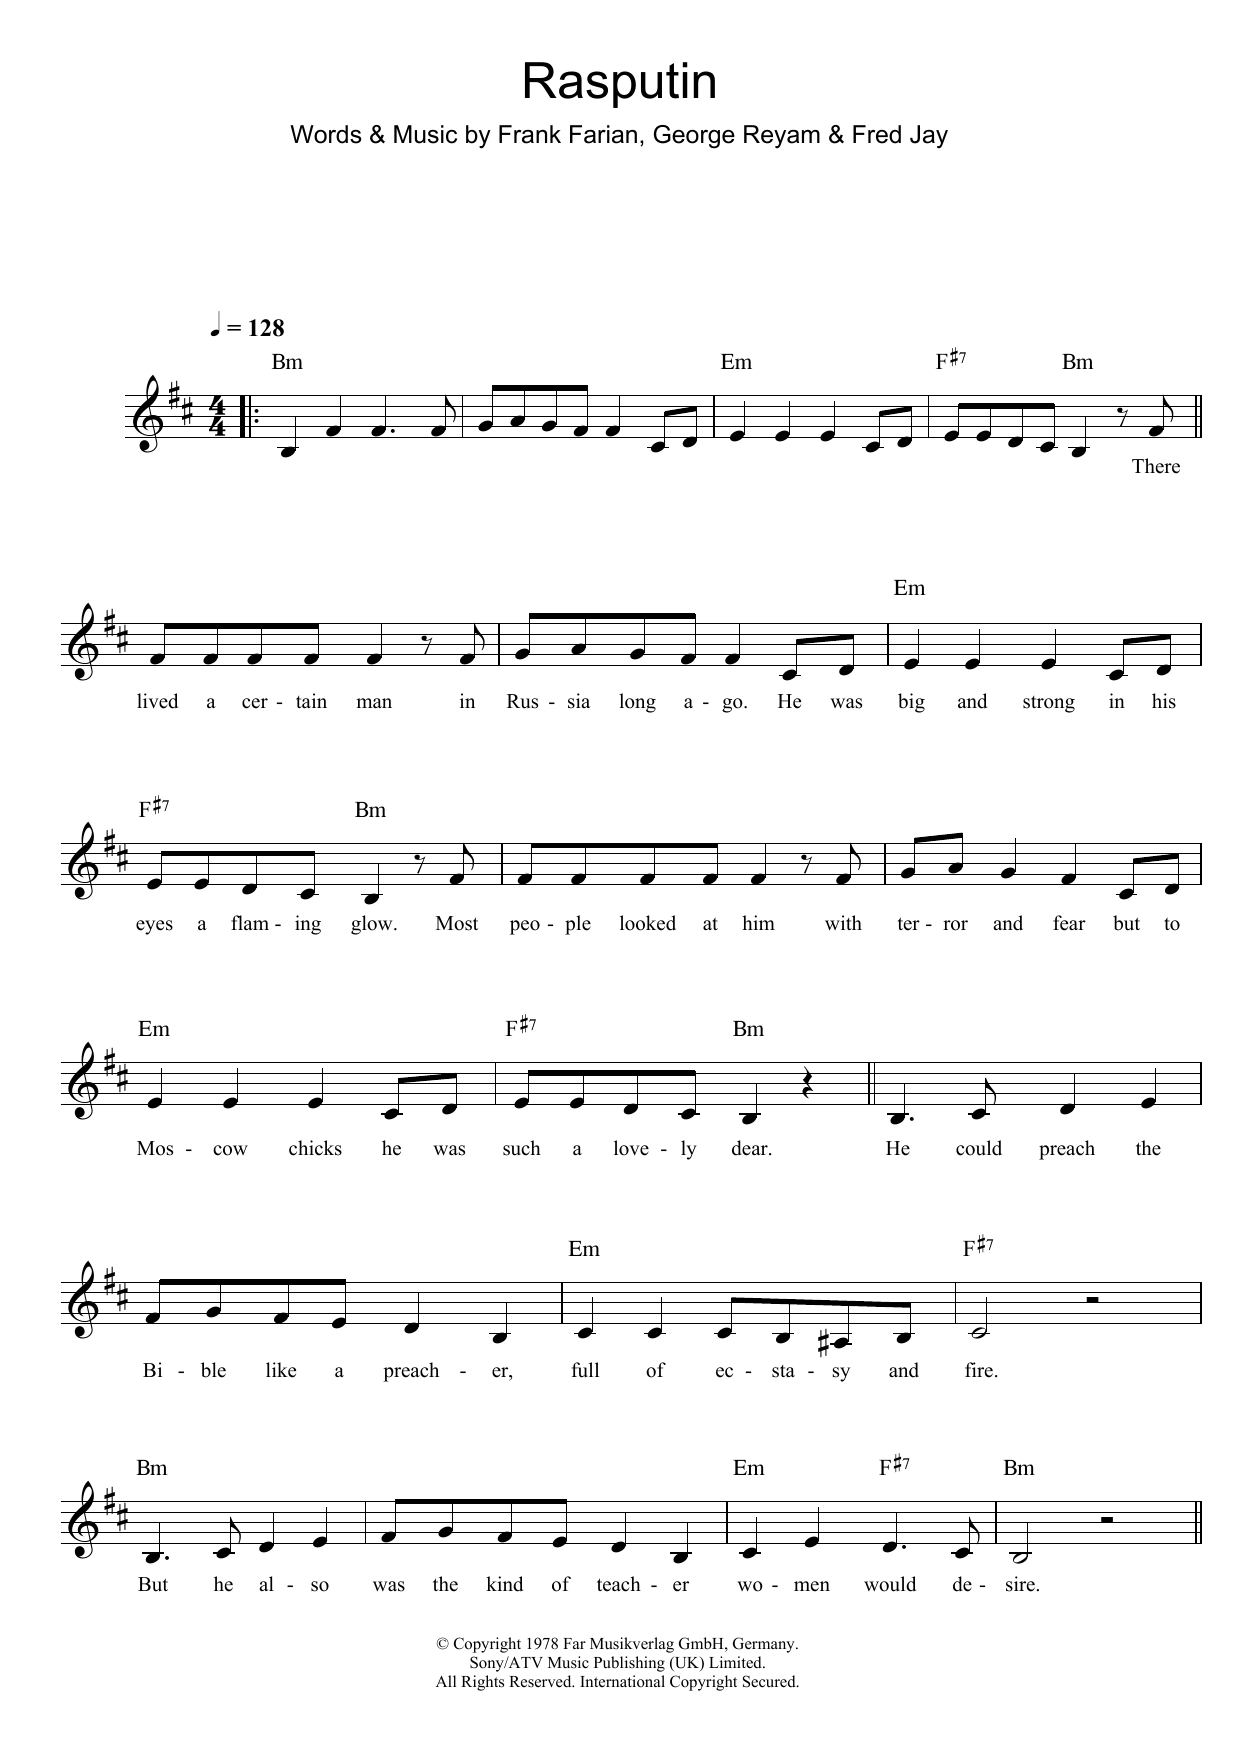 Download Boney M Rasputin Sheet Music and learn how to play Keyboard PDF digital score in minutes